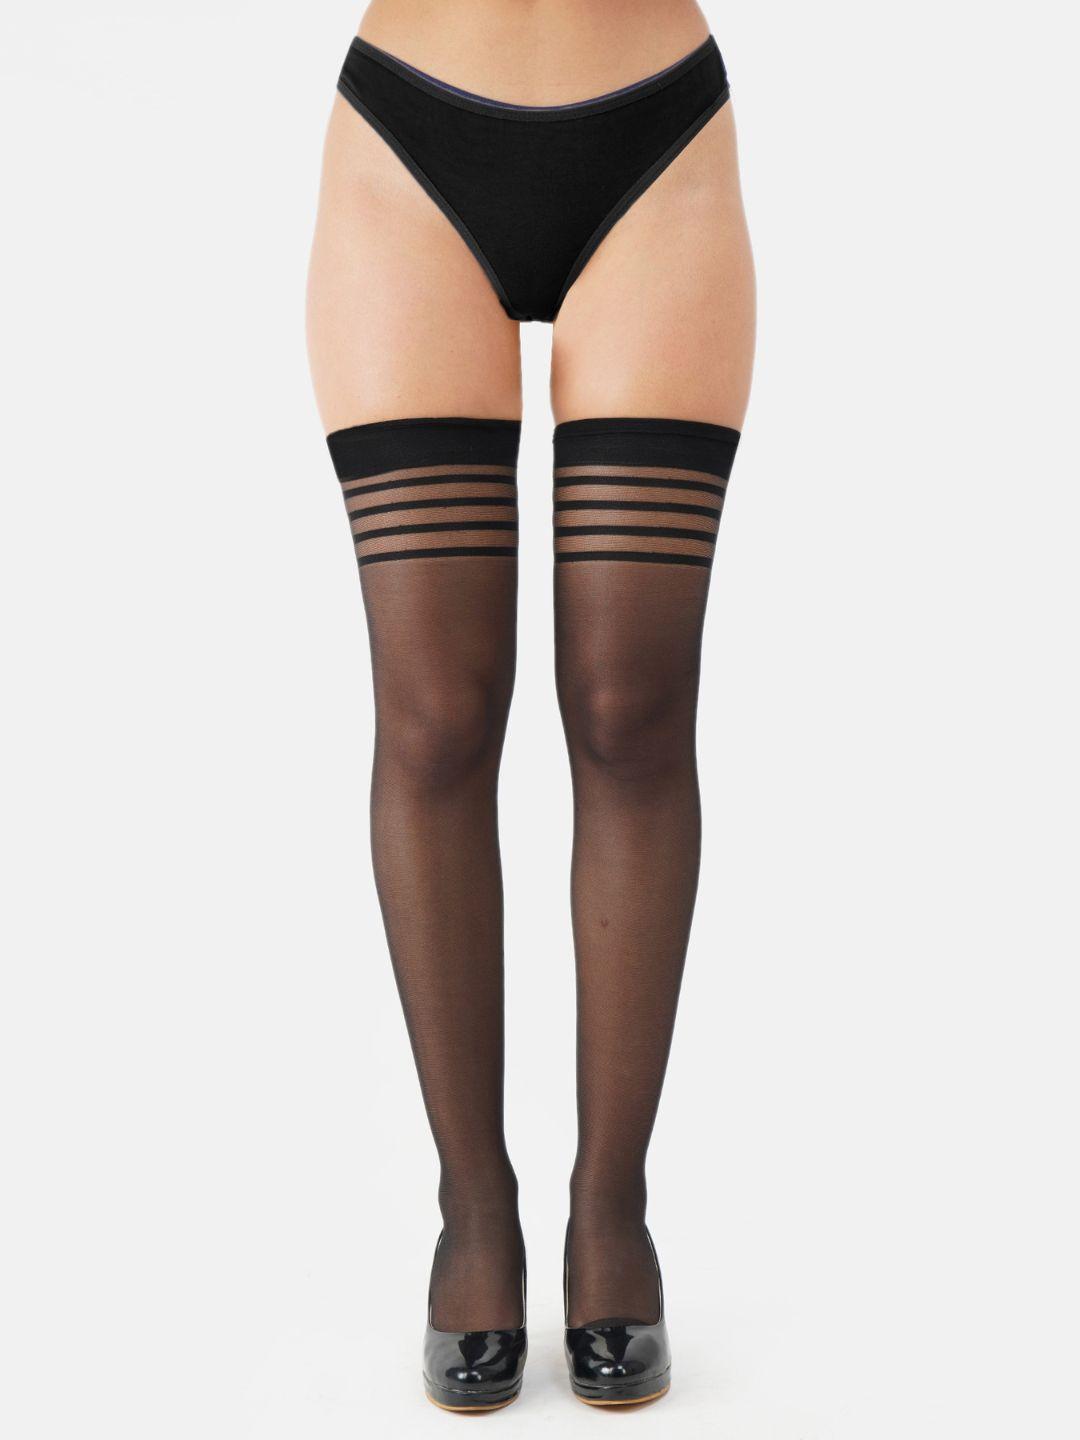 n2s next2skin women black solid sheer thigh-high stockings